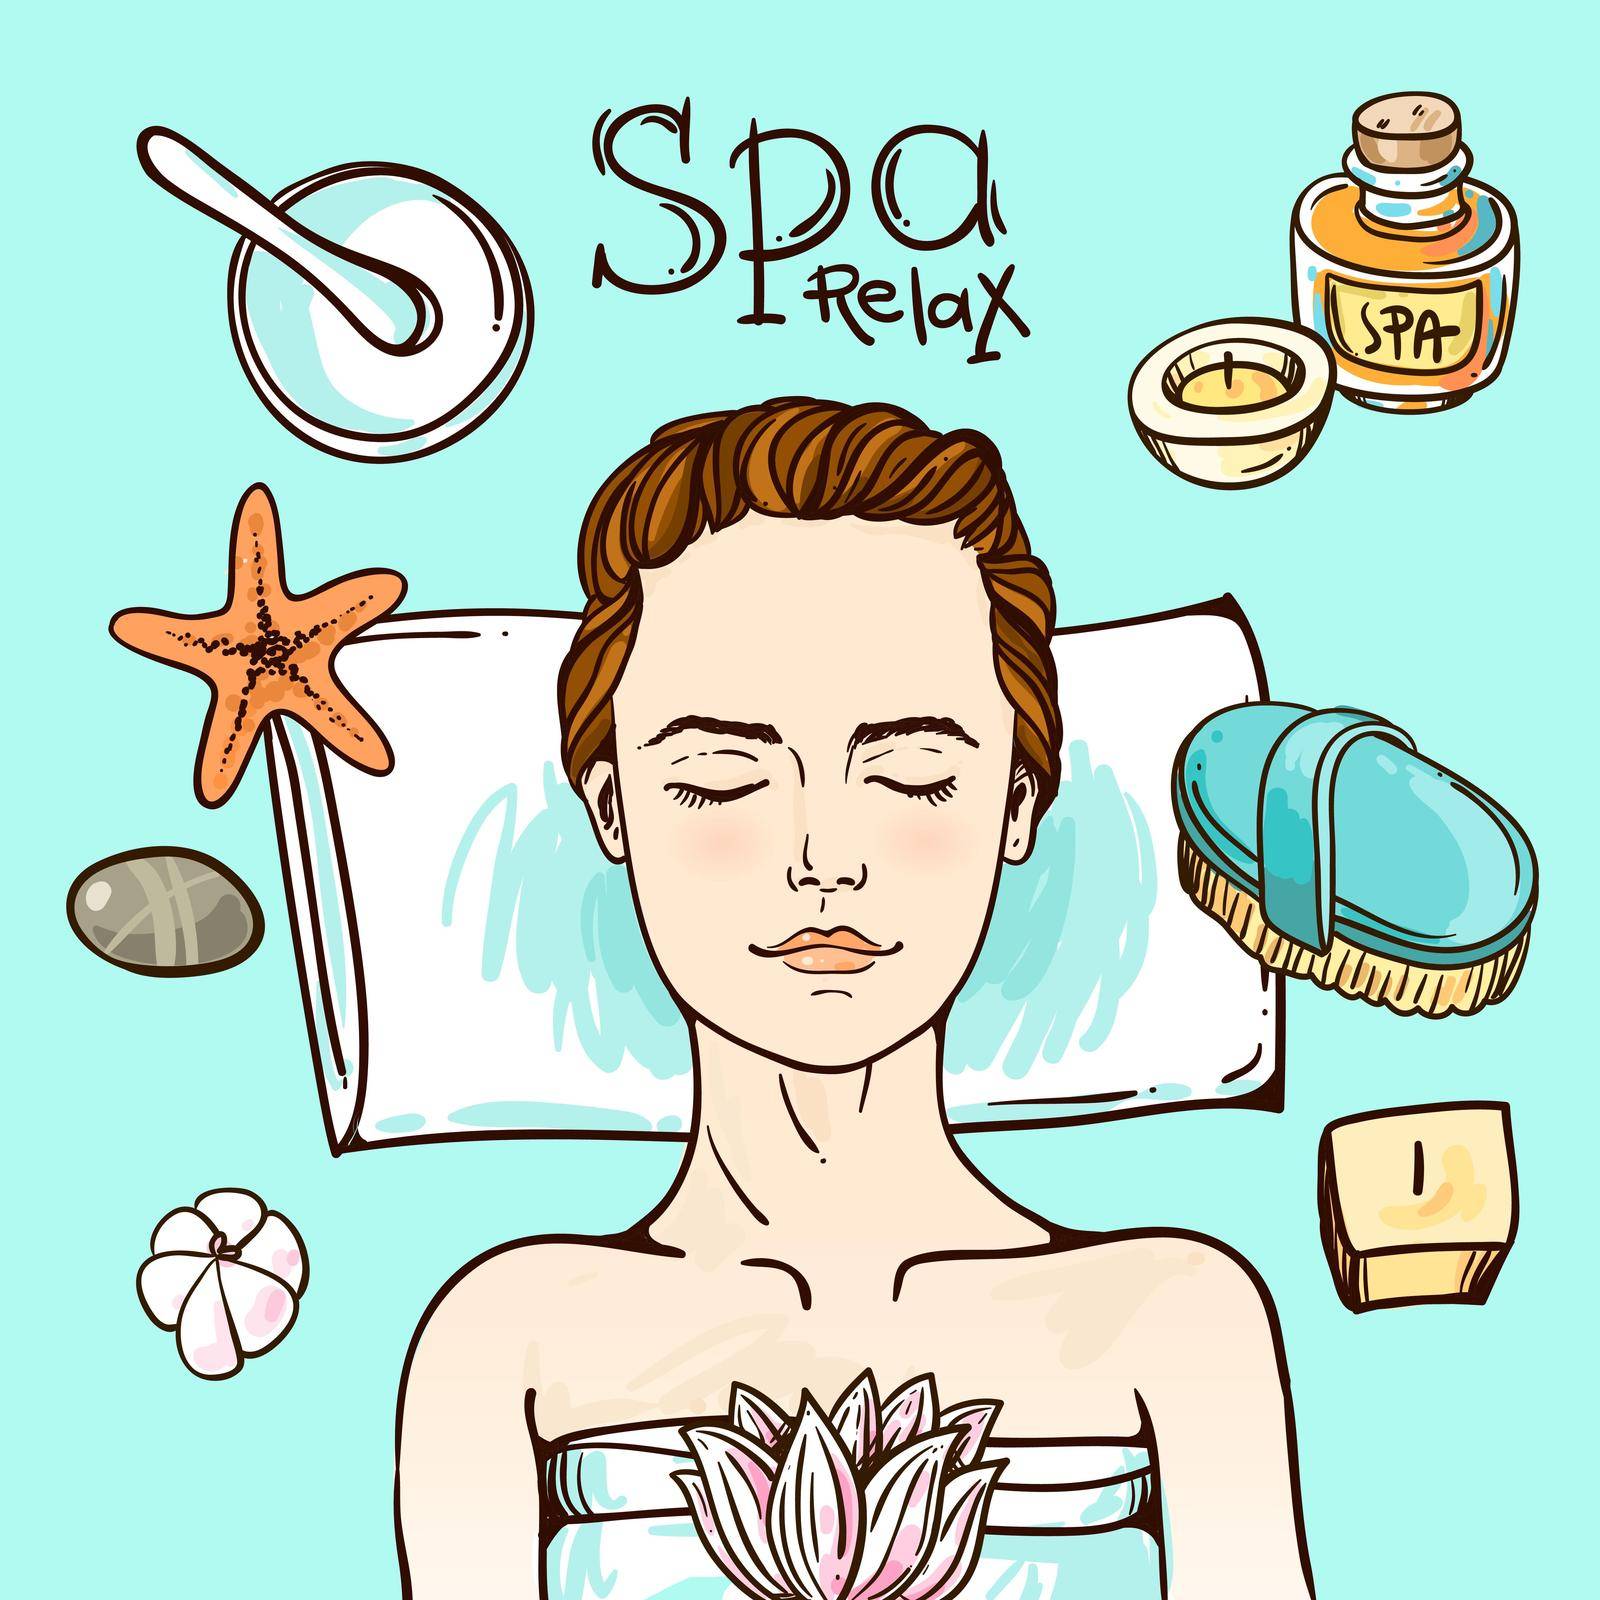 Spa woman waiting spa massage her face. by steshnikova